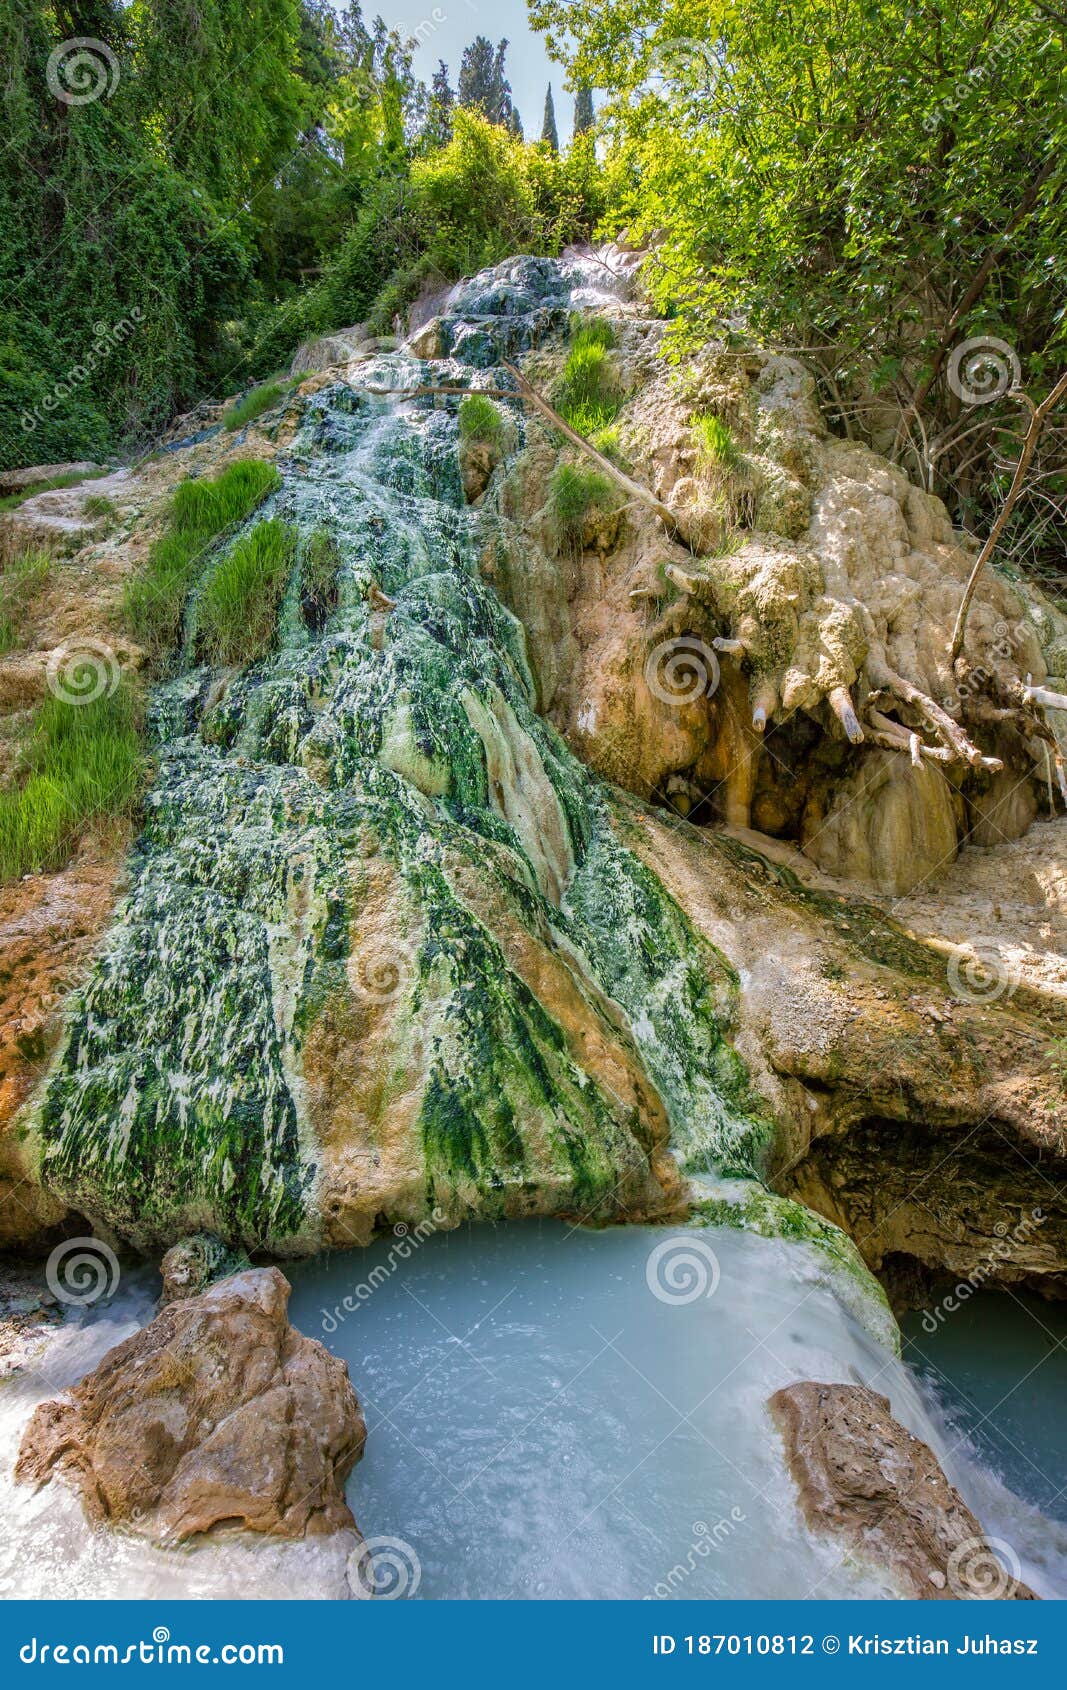 natural hot springs in bagni san filippo - fosso bianco